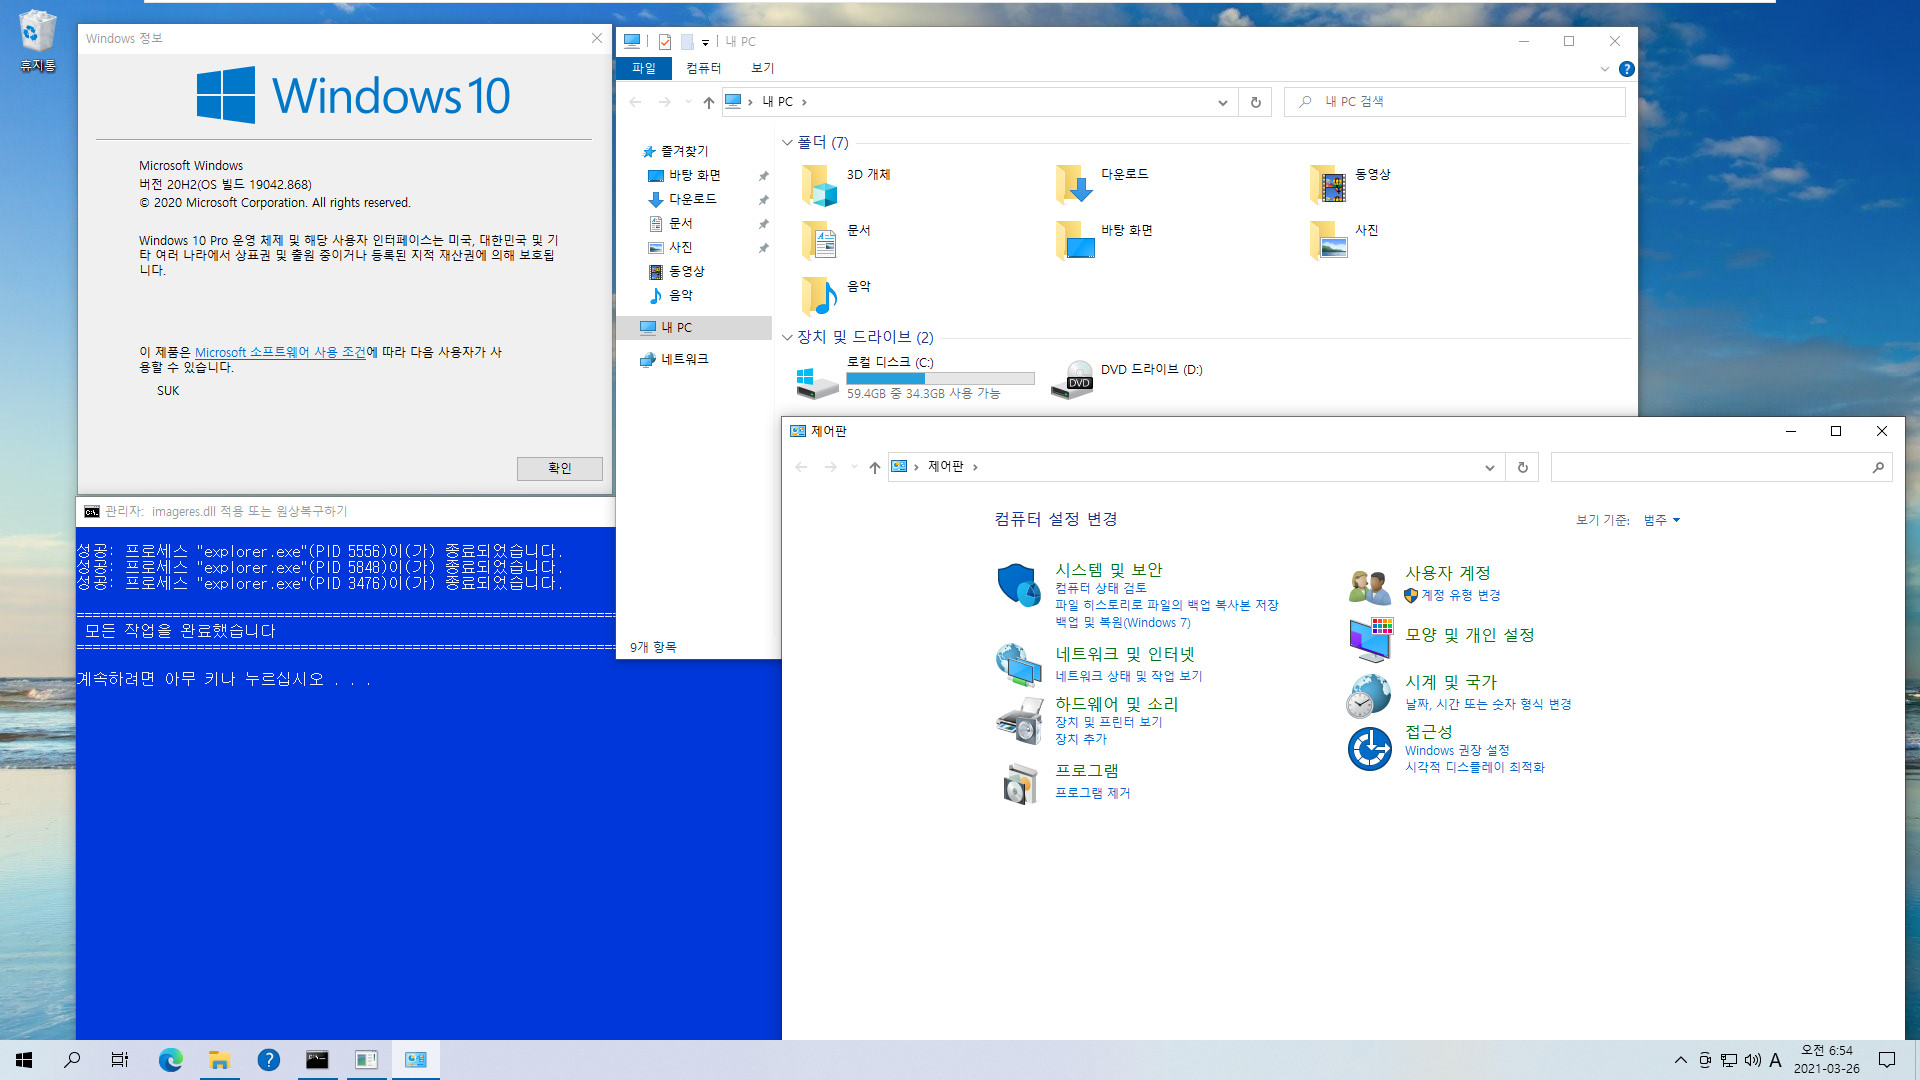 imageres.dll적용하기3 - nsudo.bat 테스트 - Windows 10 인사이더 프리뷰, 버전 21H2 추정, 빌드 21343.1000, PRO x64의 아이콘 적용하기 - 버전 21H1, 버전 20H2와 버전 2004까지 32비트 윈도우도 적용됩니다 2021-03-26_065447.jpg